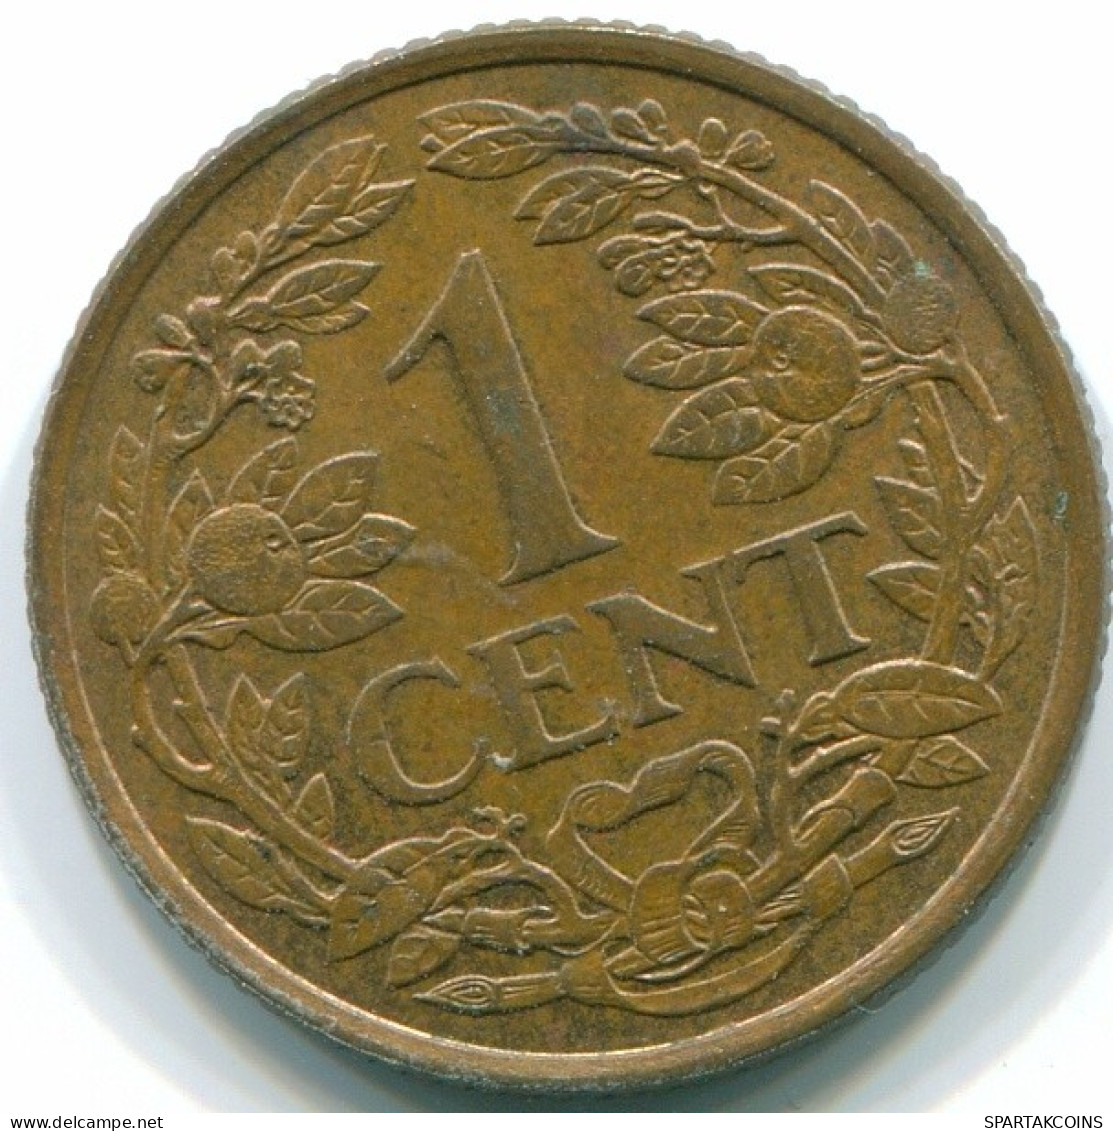 1 CENT 1968 NETHERLANDS ANTILLES Bronze Fish Colonial Coin #S10780.U.A - Niederländische Antillen